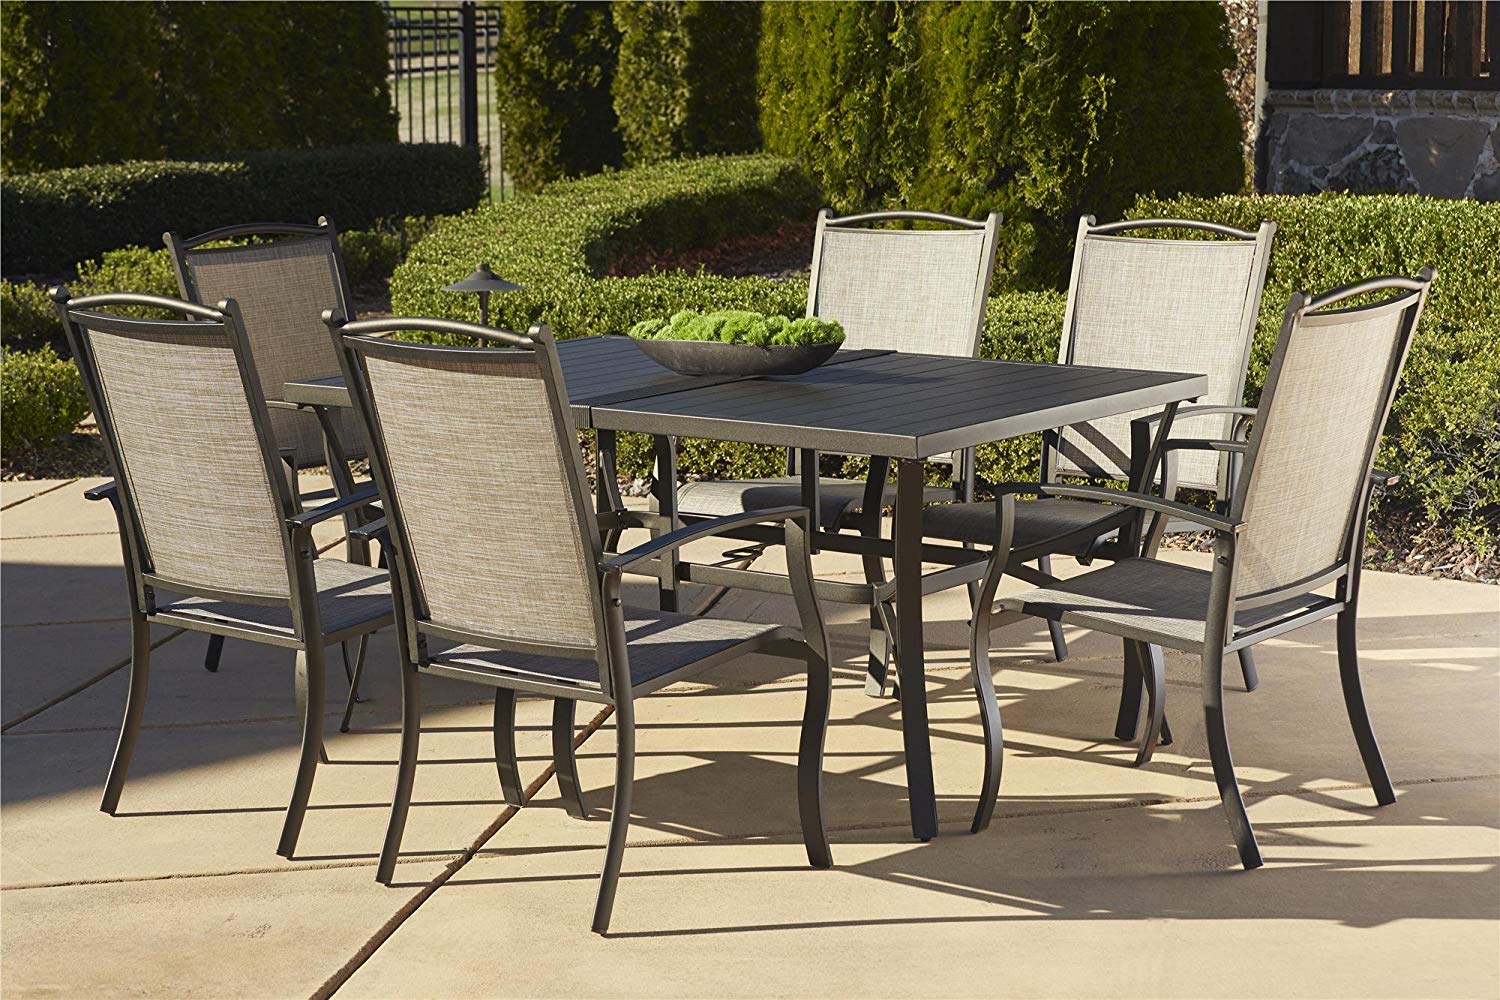 patio table sets amazon.com: cosco outdoor 7 piece serene ridge aluminum patio dining set, ISKPQVD